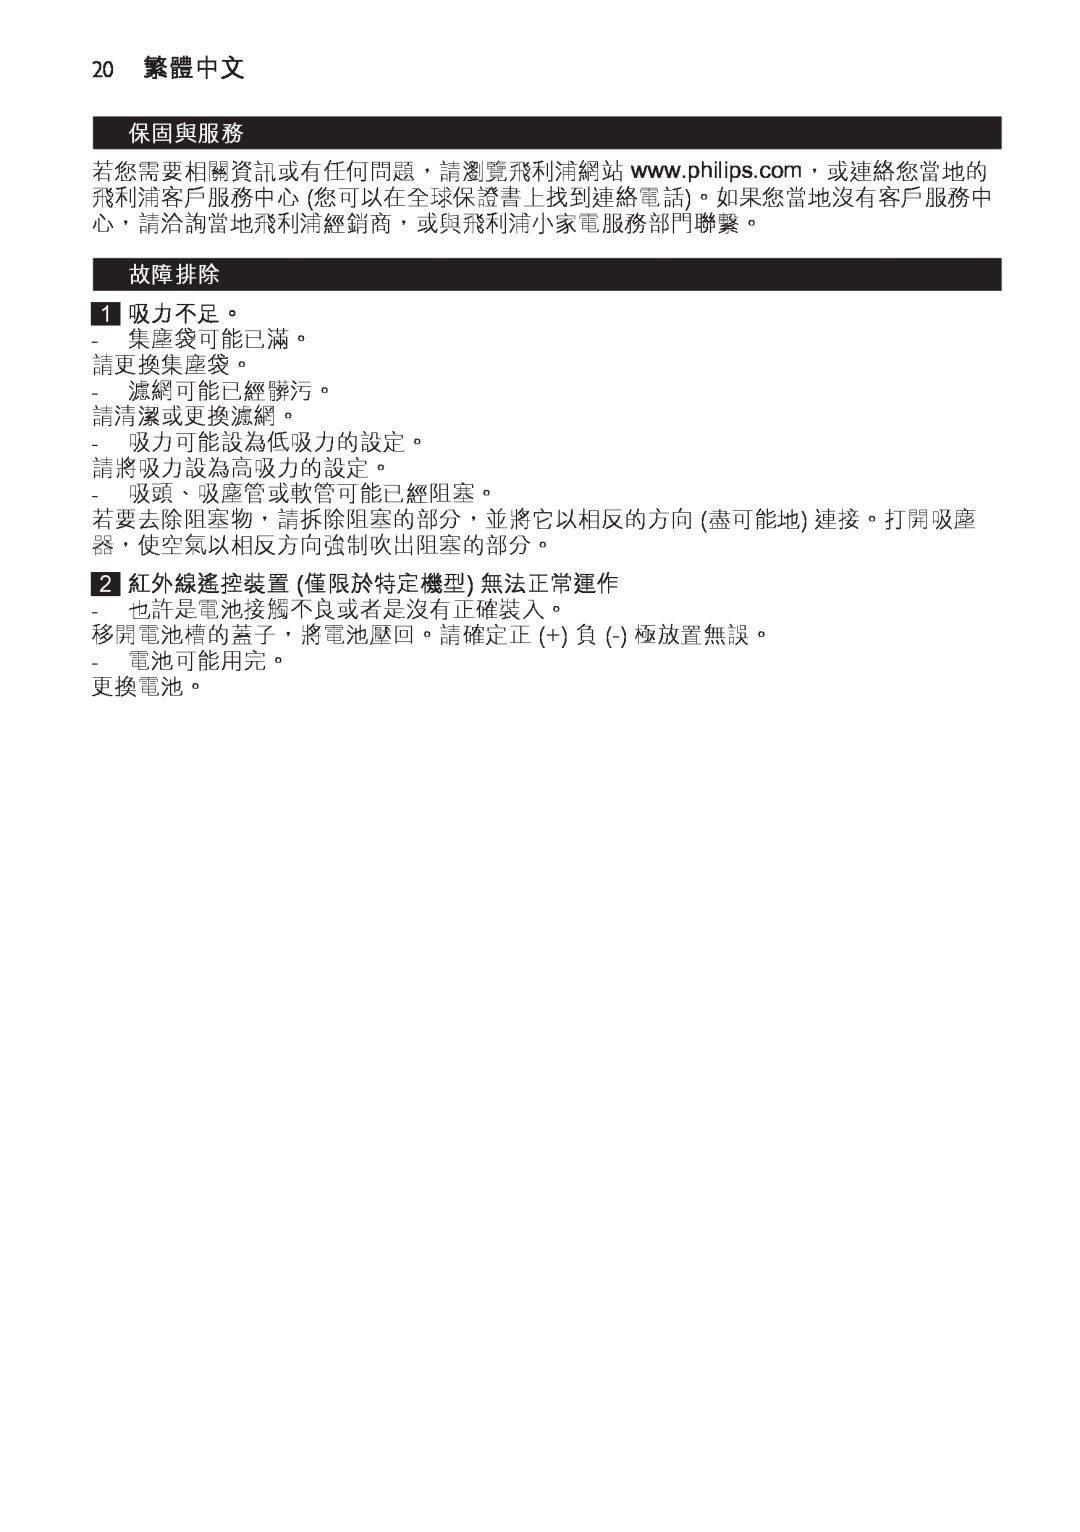 Philips FC9166-9160 manual 20繁體中文, 保固與服務, 故障排除 